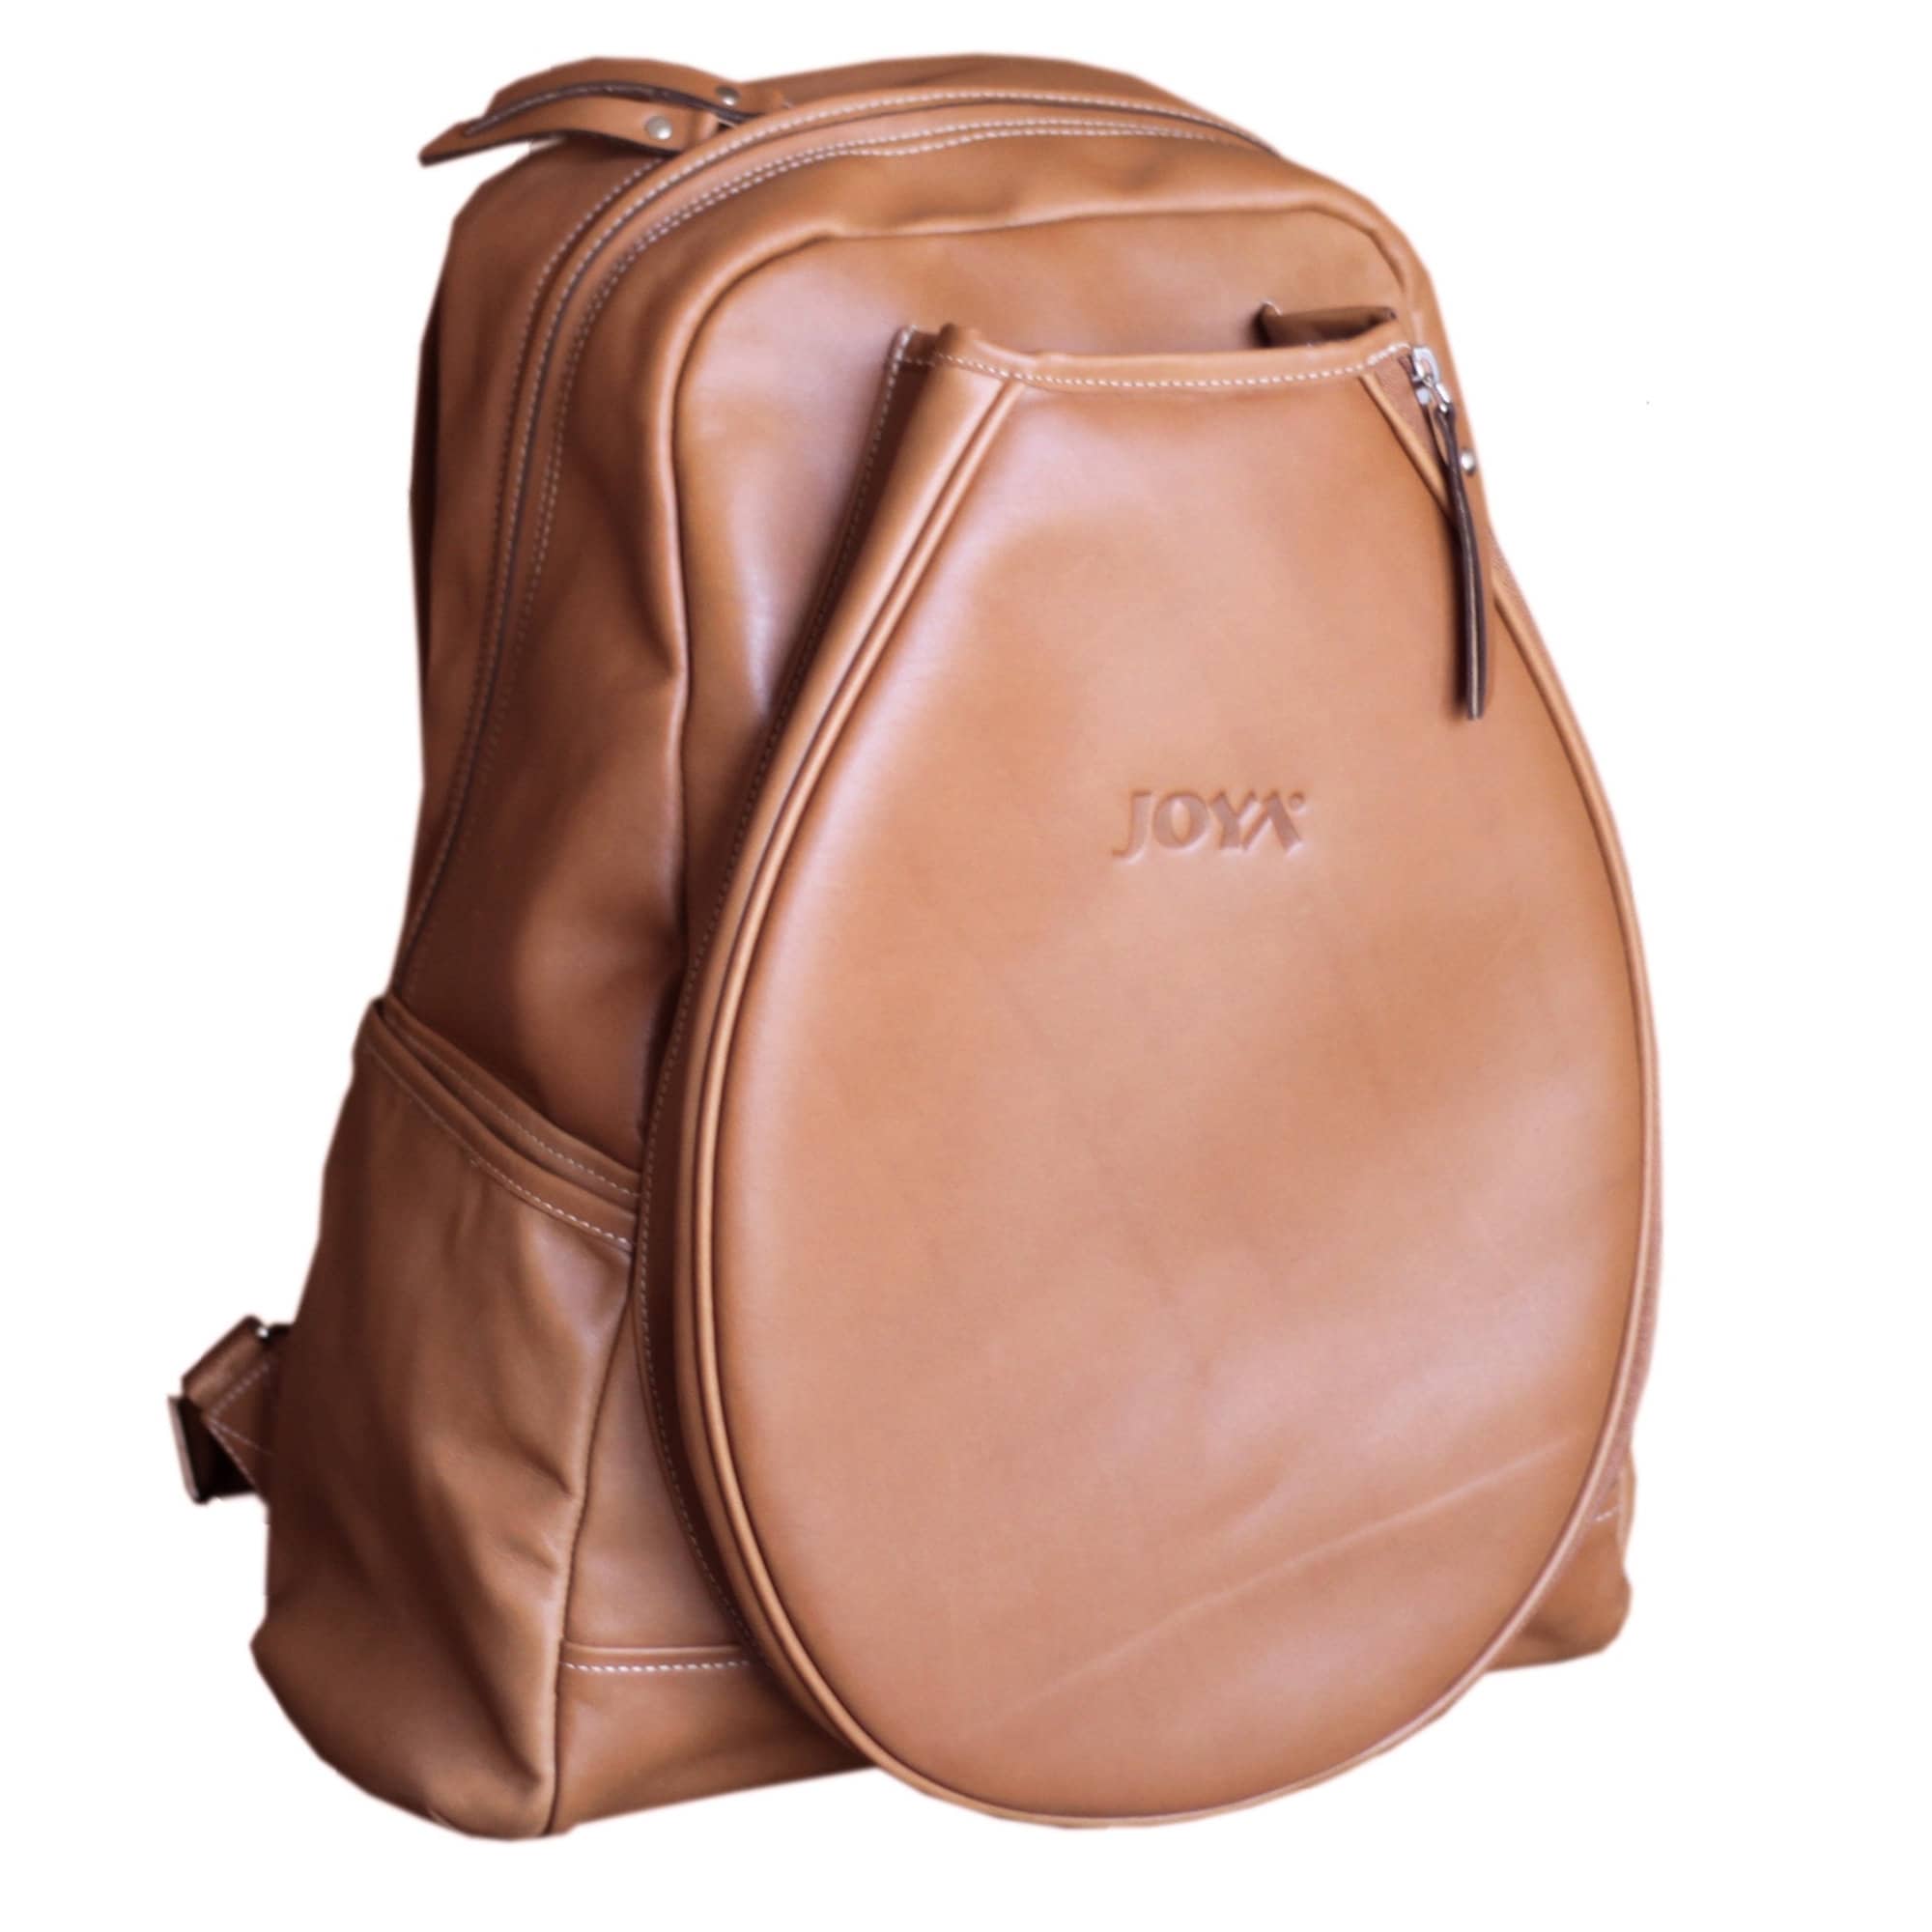 Joya Personalized Top Grain Italian Leather Backpack Tennis